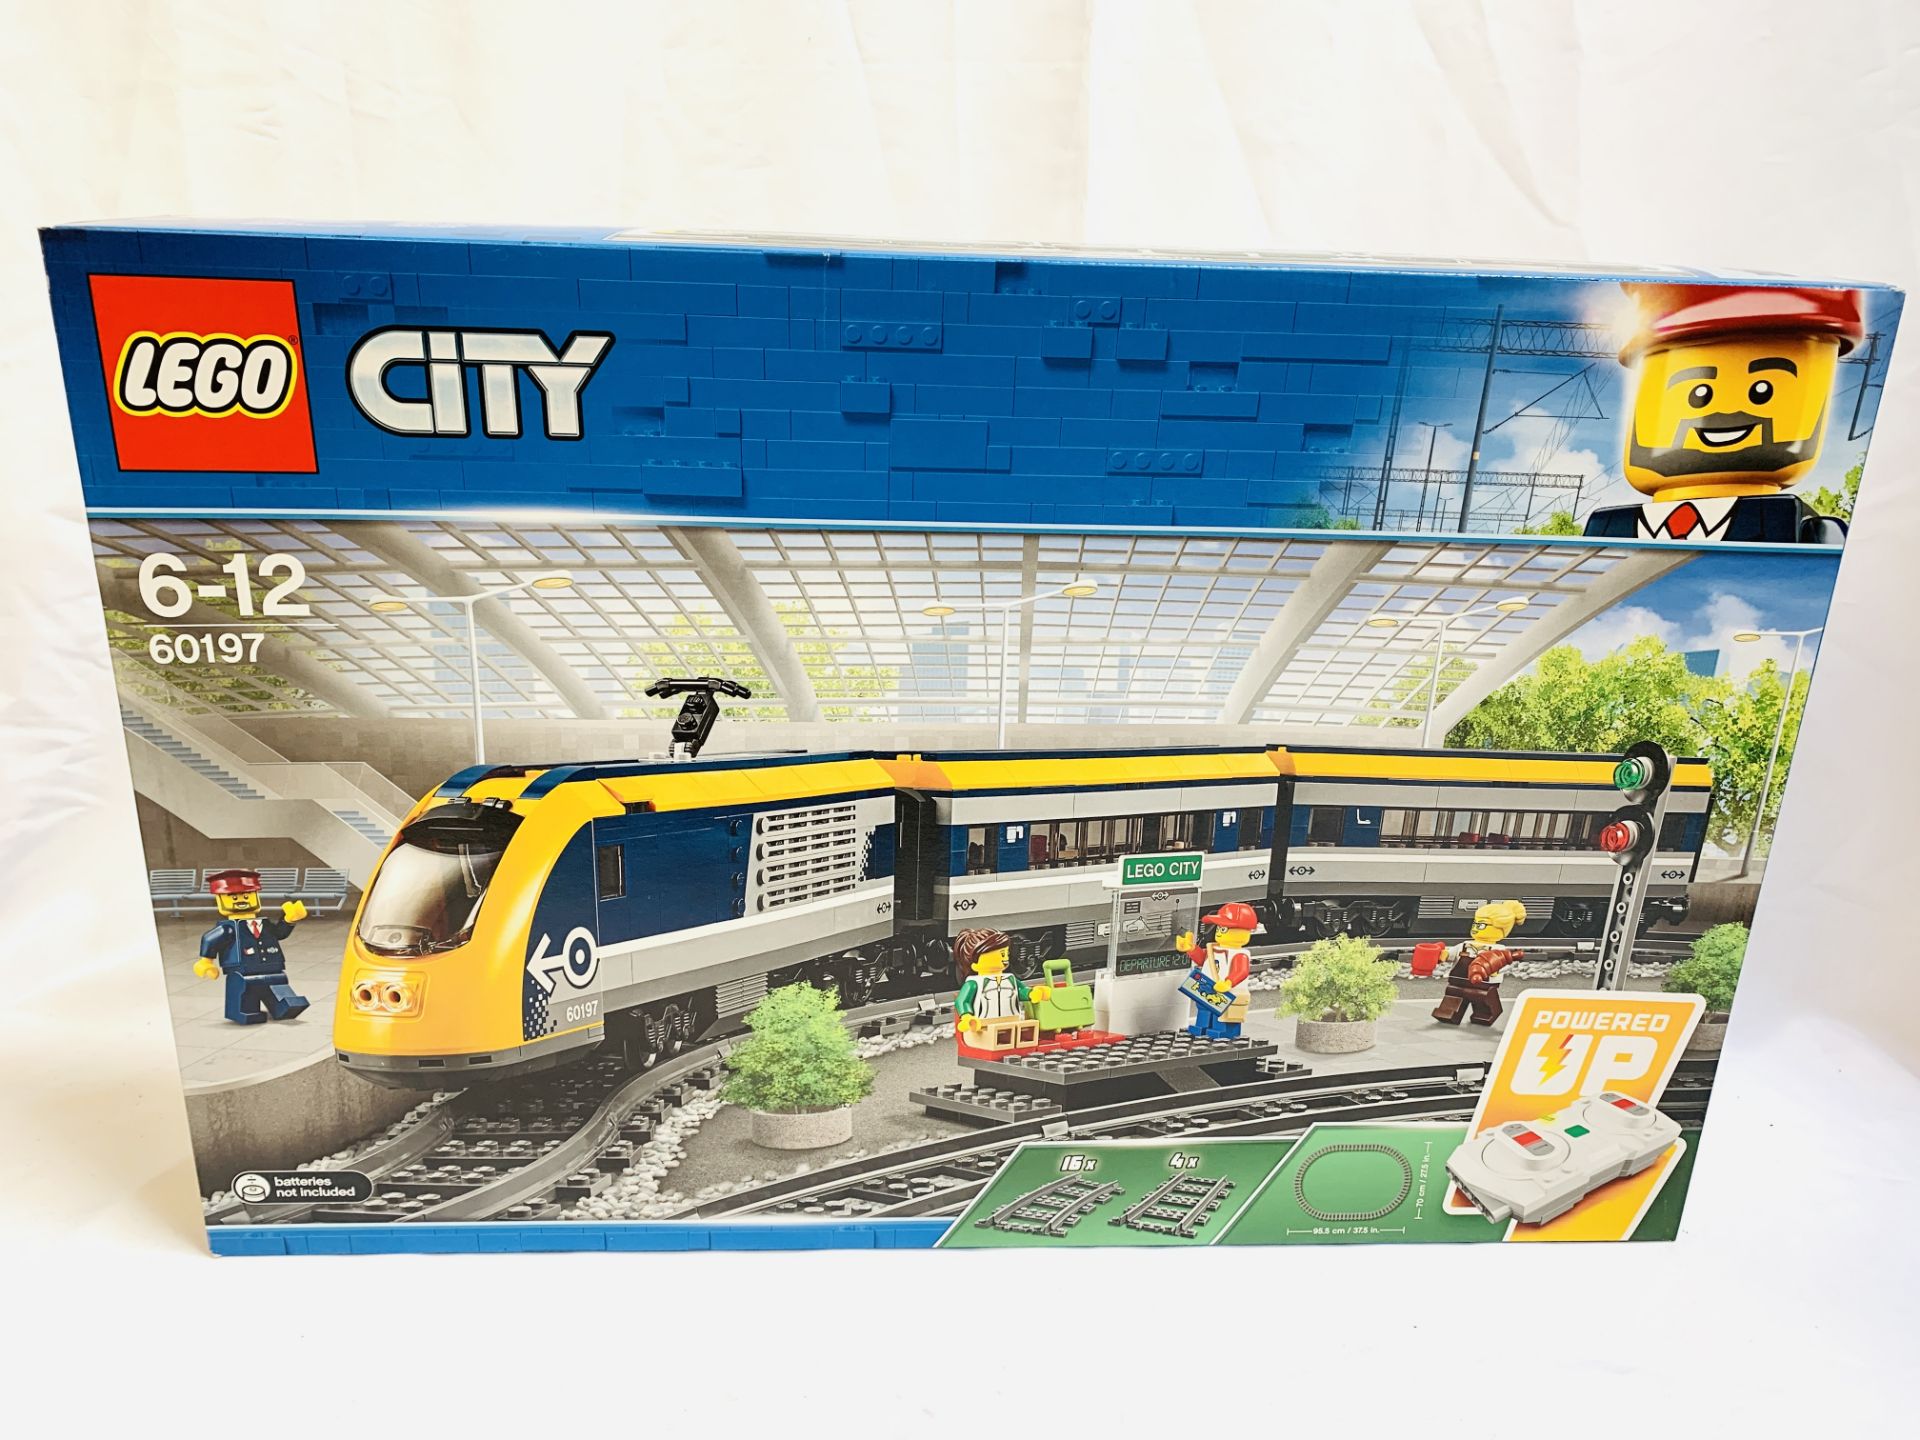 Lego City model 60197 train set